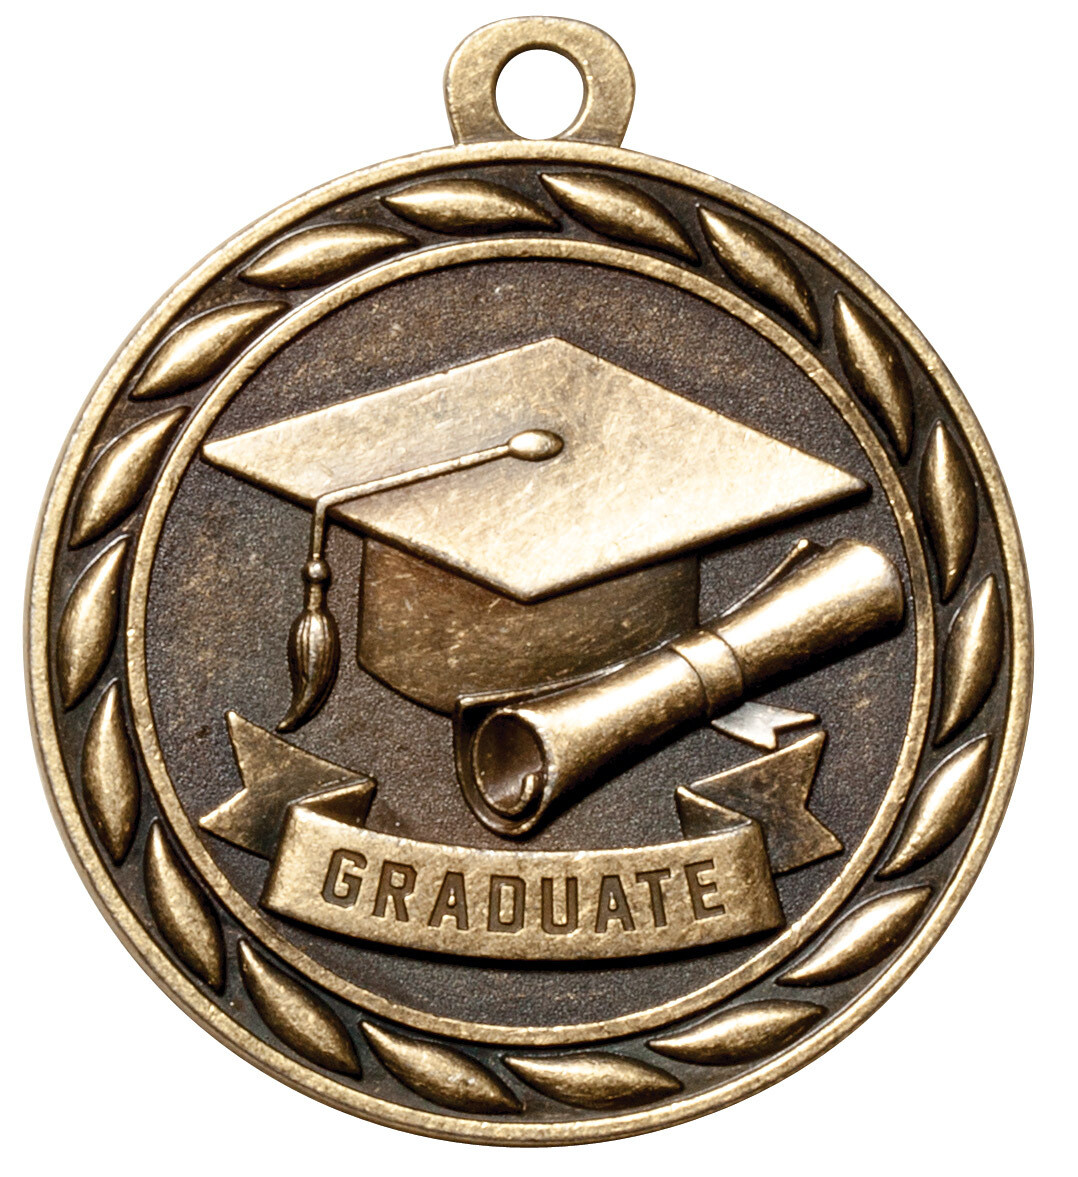 Scholastic Medal Series
GRADUATE